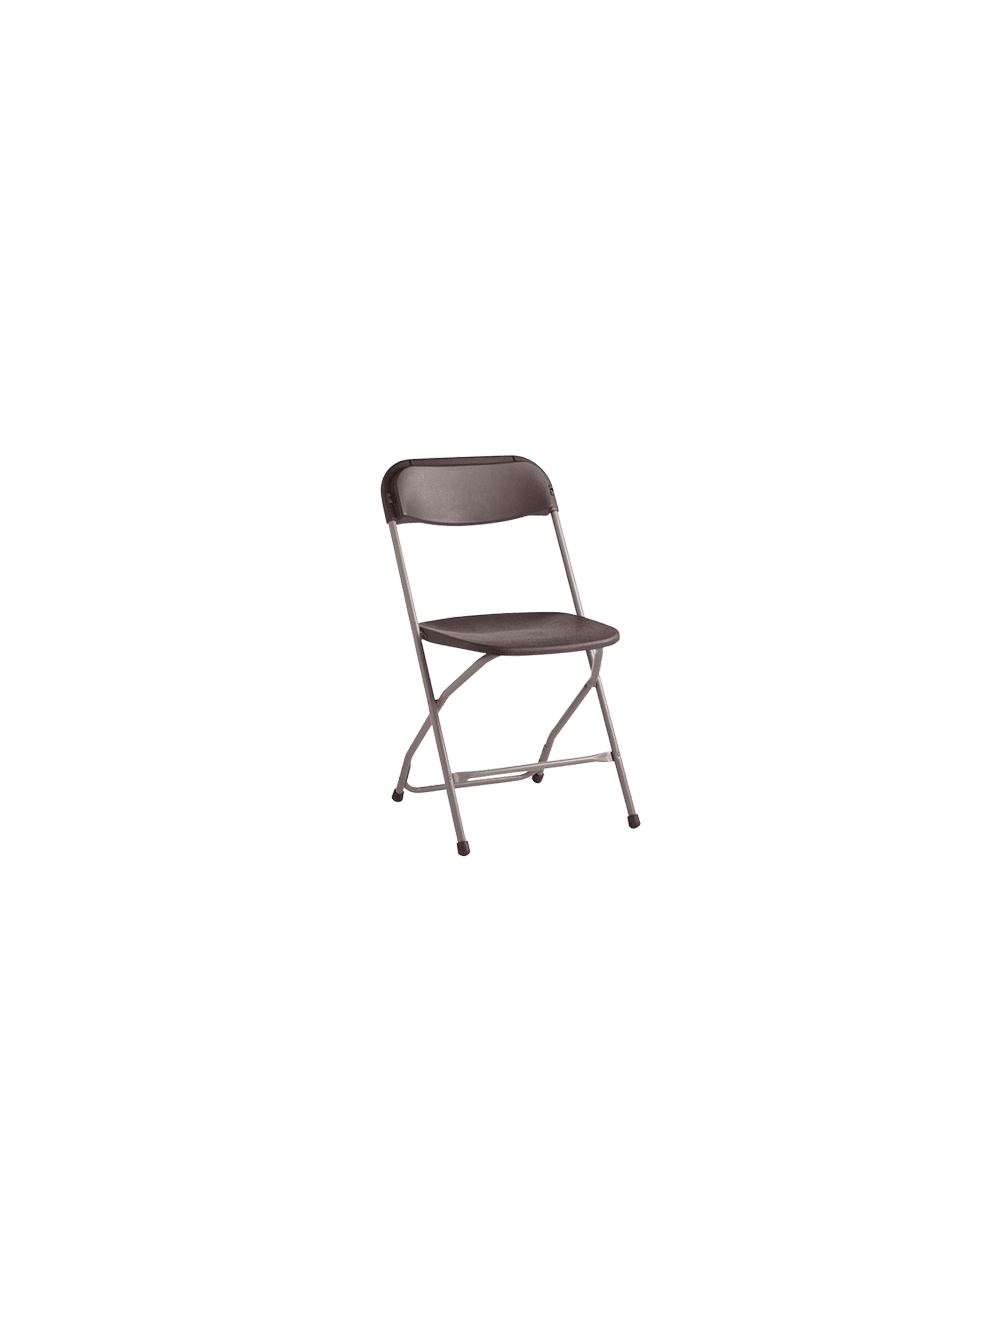 Brown Samsonite Folding Chair Tudugcc36swfazwv 